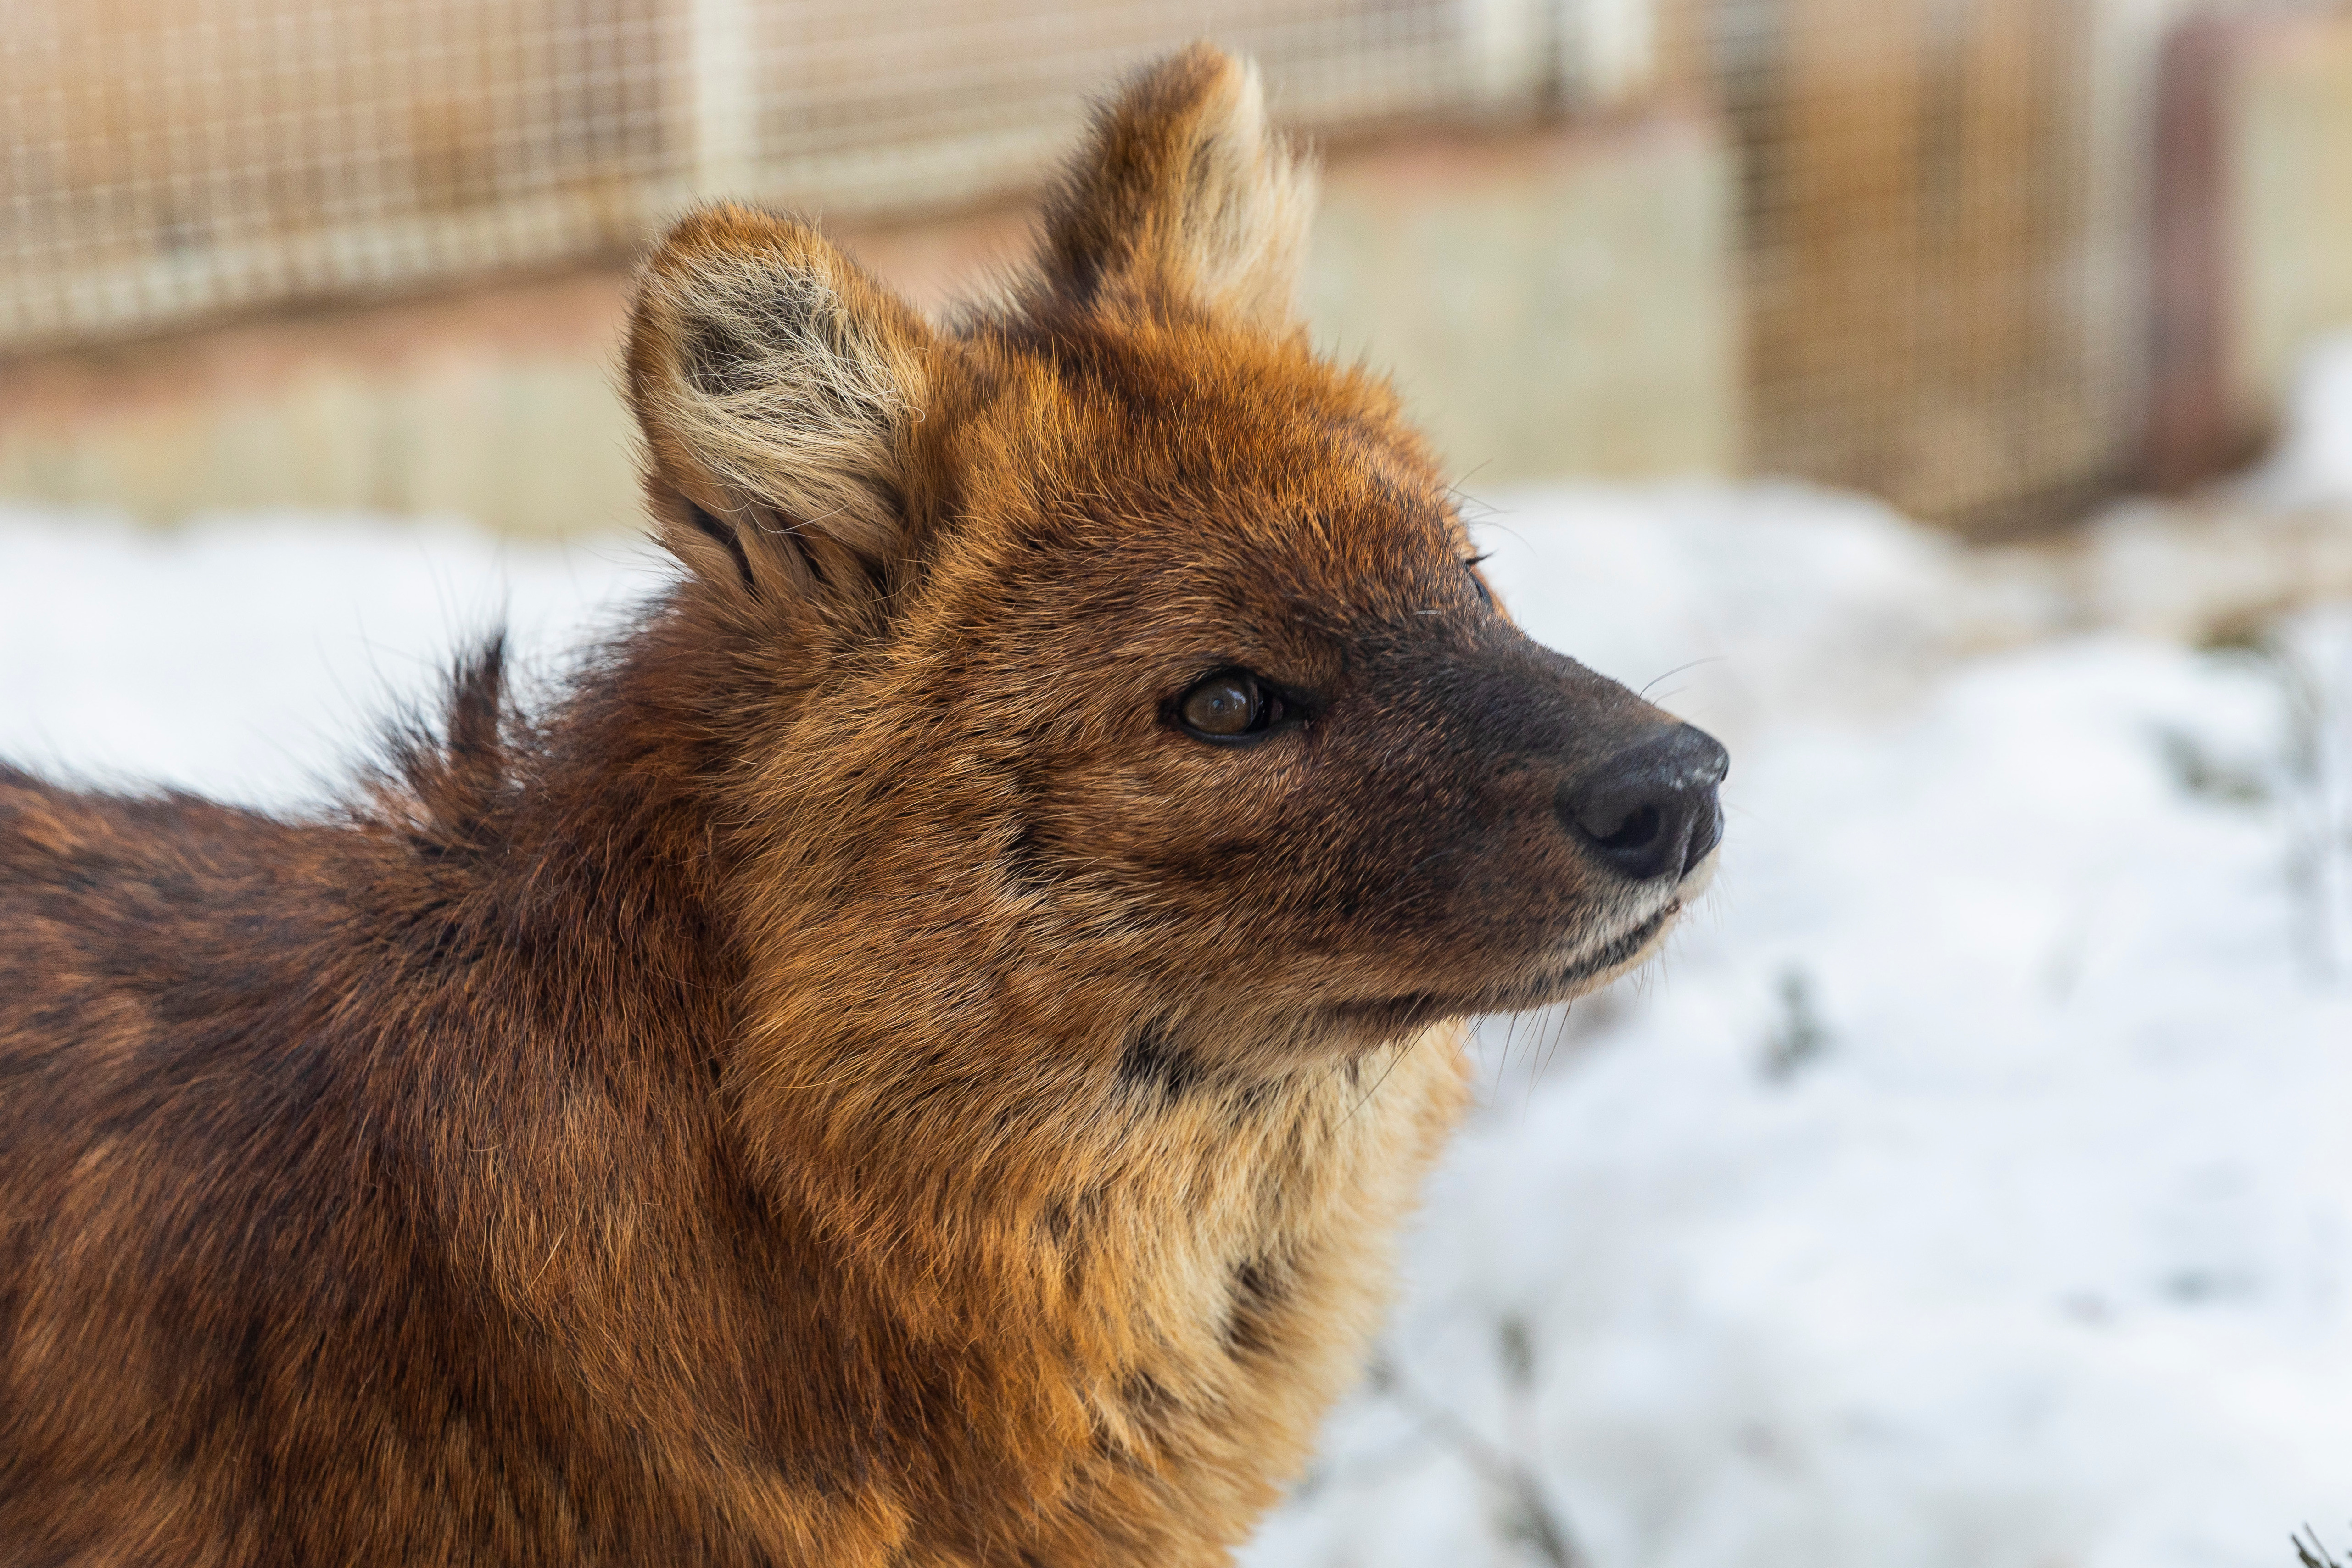 ОЭЗ «Технополис Москва» взяла опекунство над редким волком из столичного зоопарка